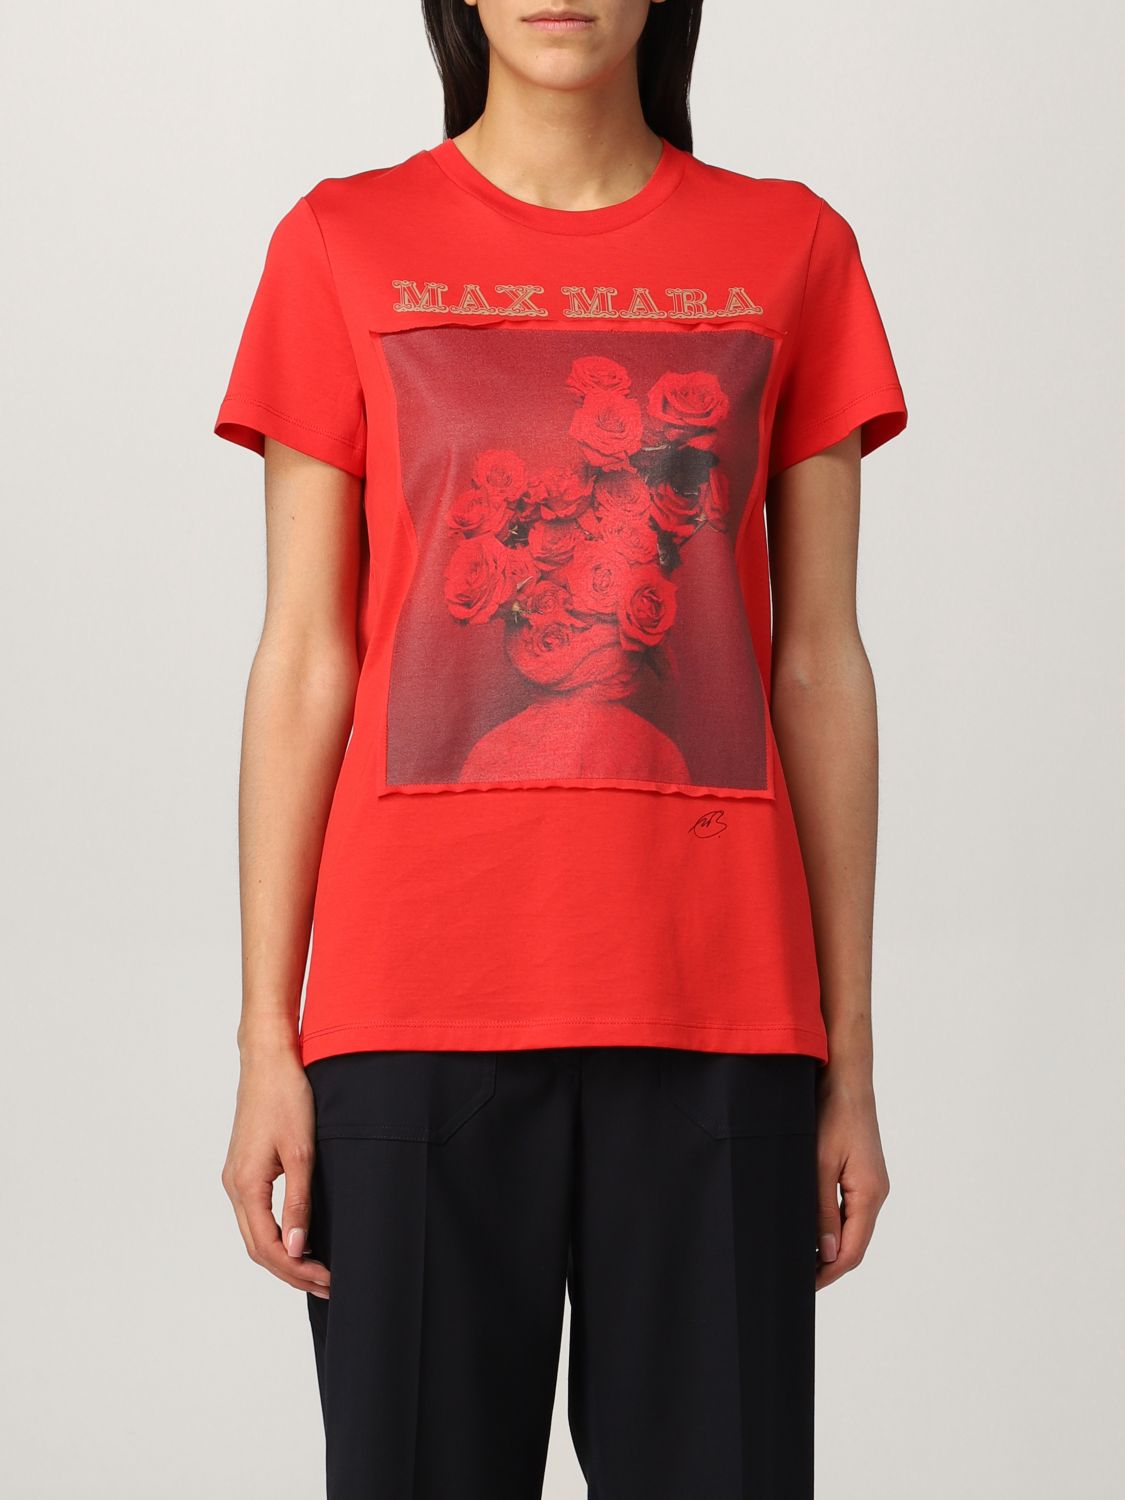 MAX MARA: Red cotton t-shirt with flower print - Red | Max Mara t-shirt ...